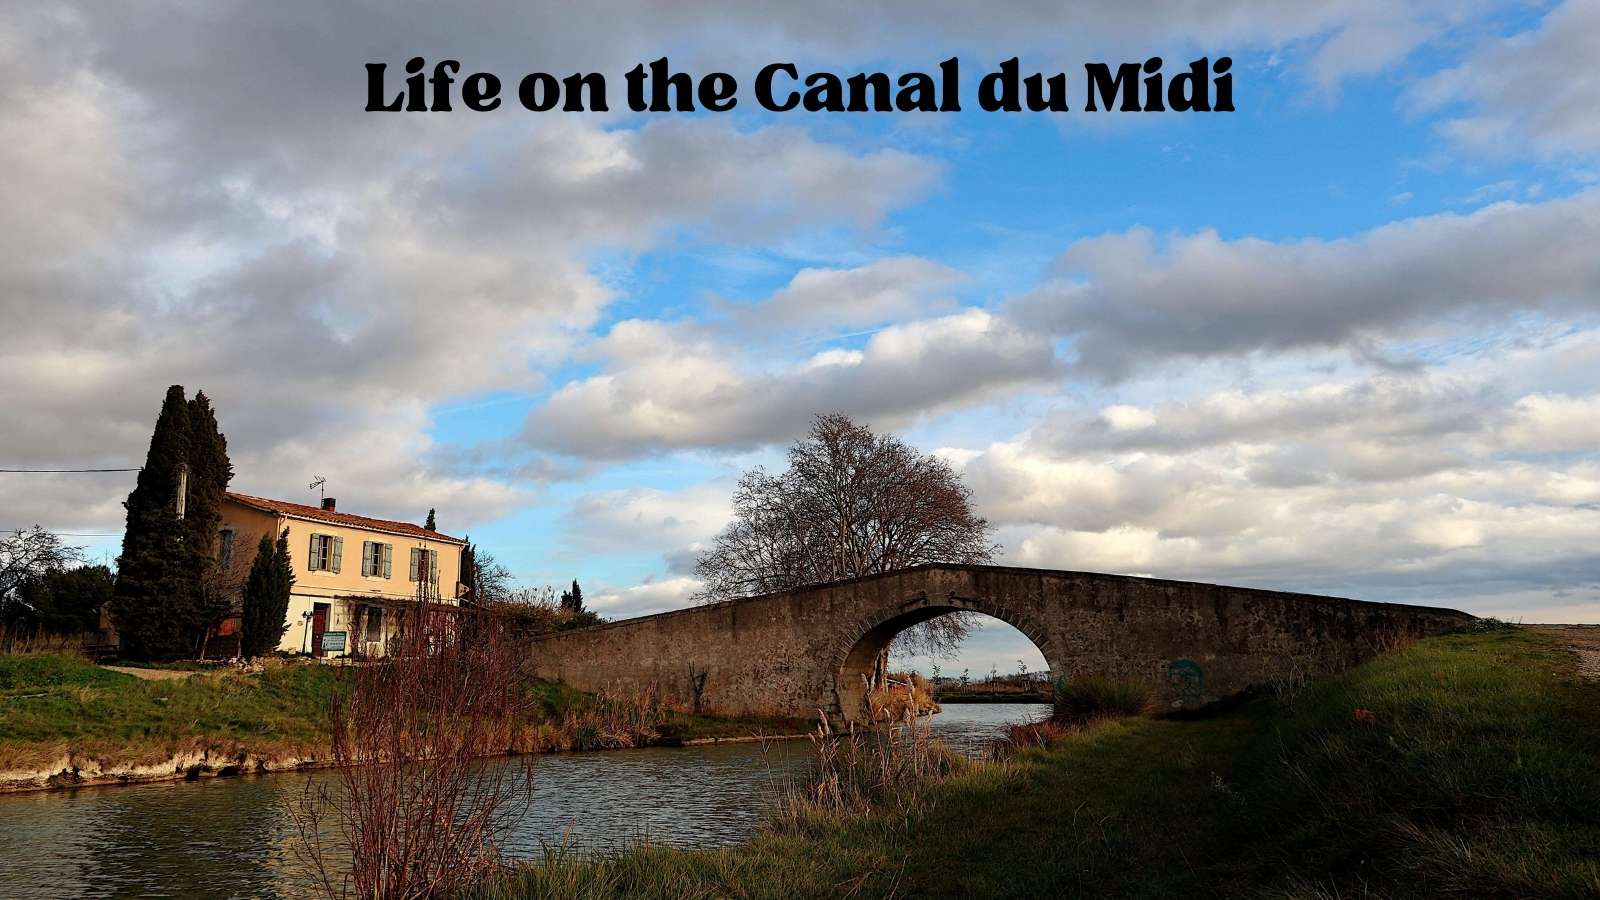 Bridge over the Canal at Saint-Nazaire-d'Aude: Life on the Canal du Midi episode